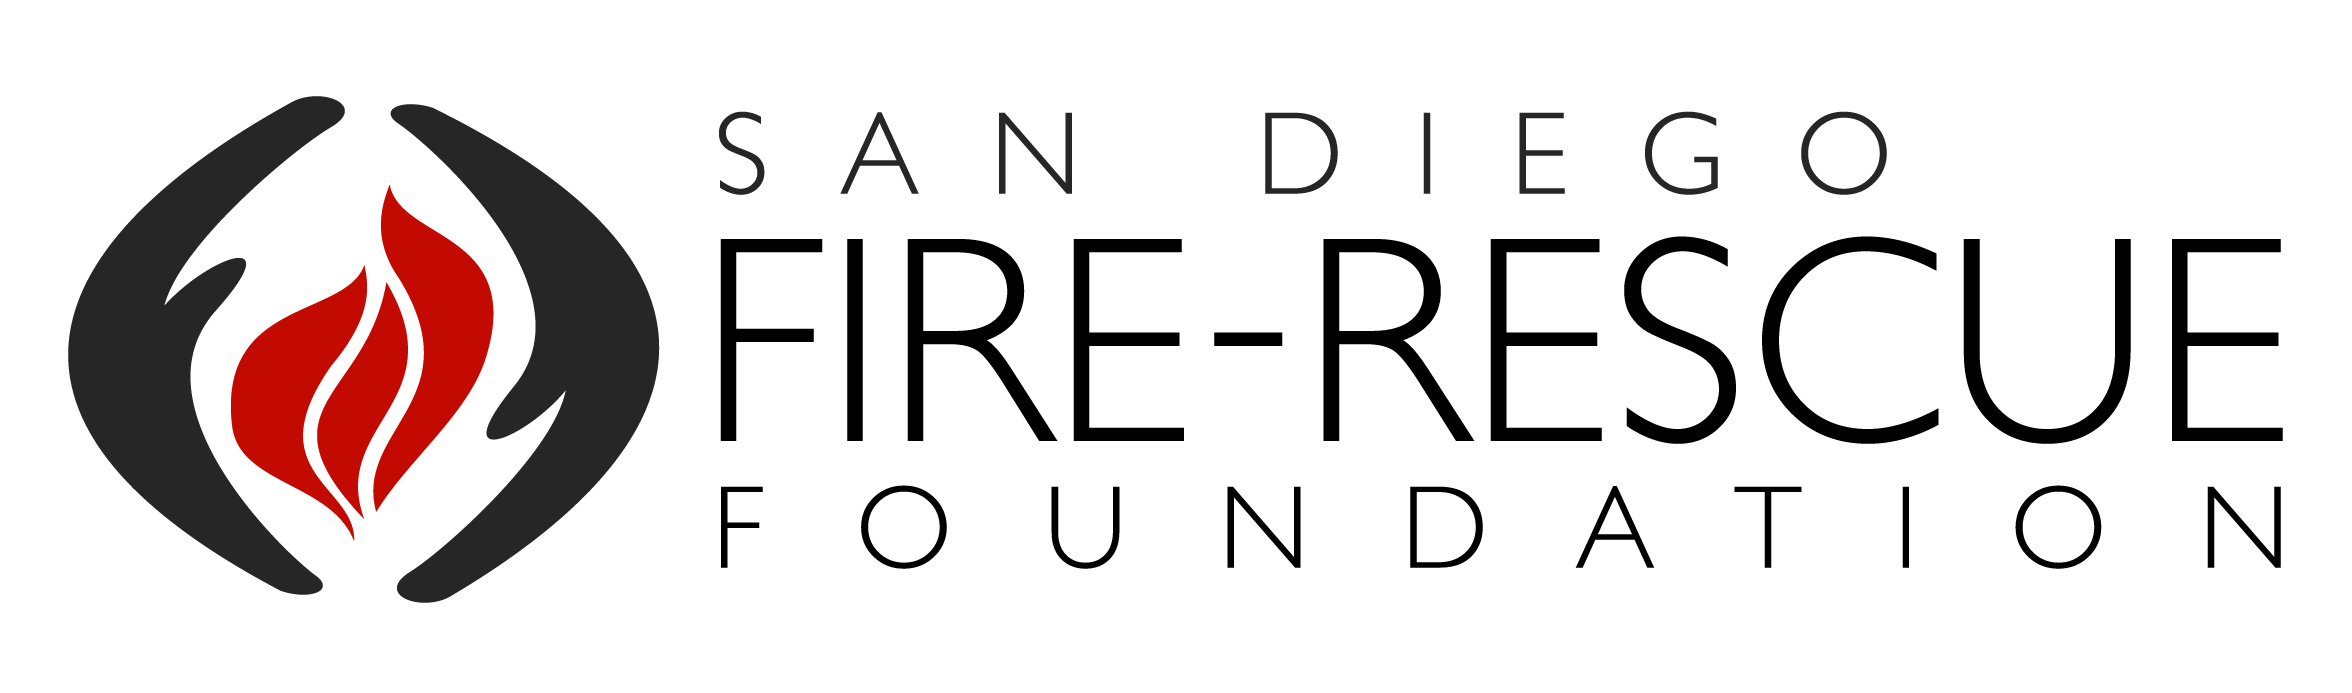 San Diego Fire-Rescue Foundation